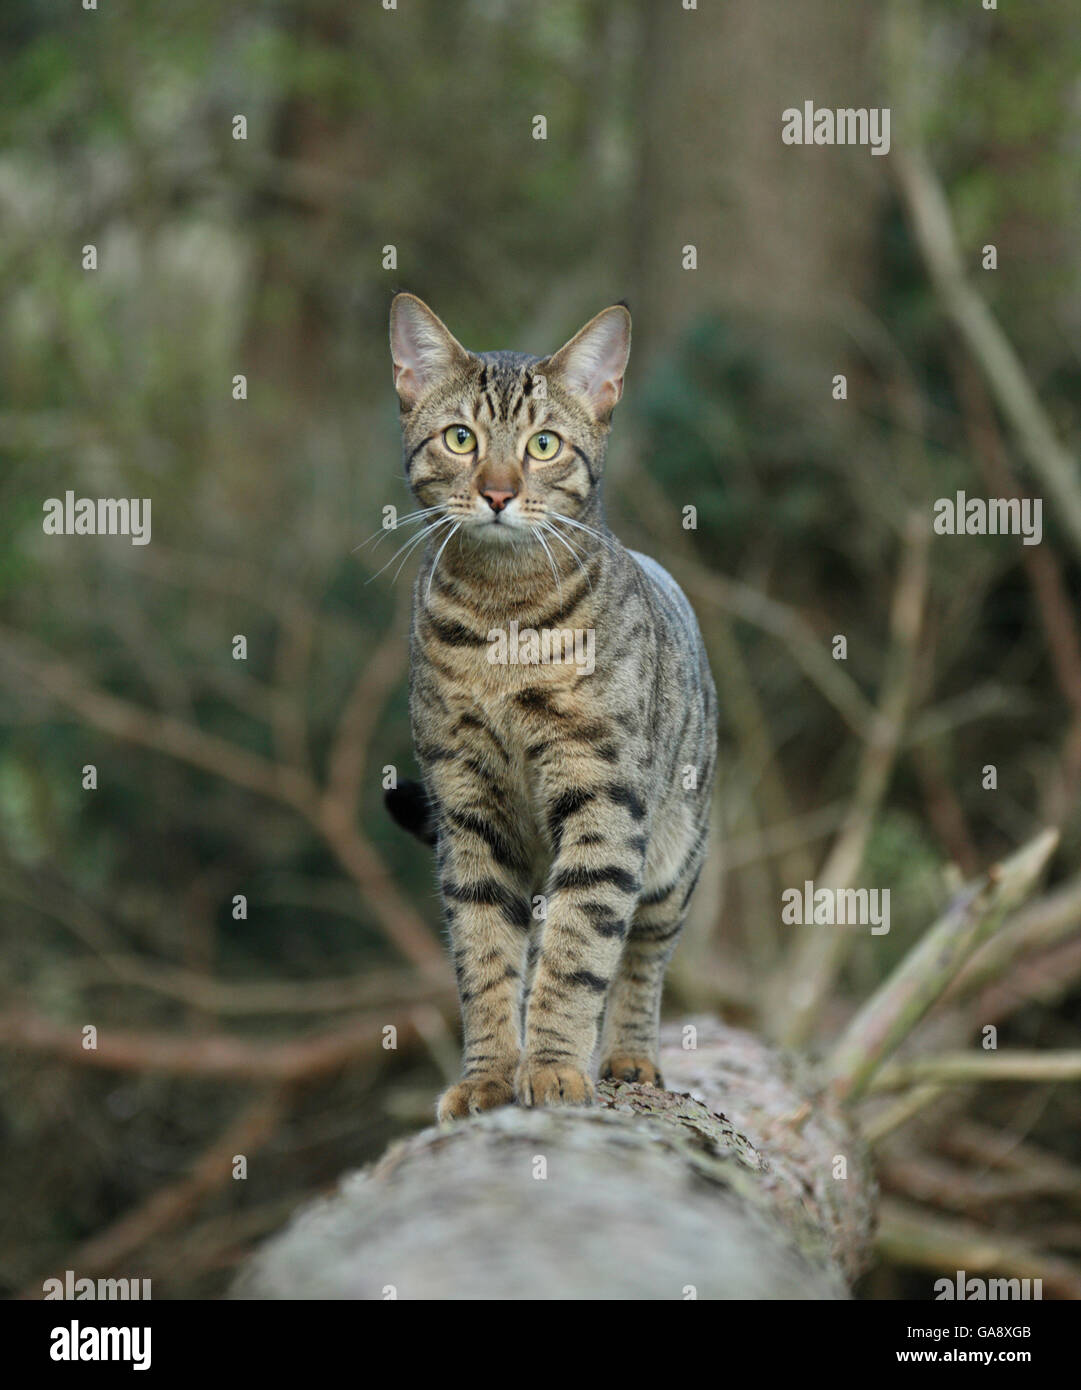 Gato de Bengala de pie sobre un árbol caído. Foto de stock